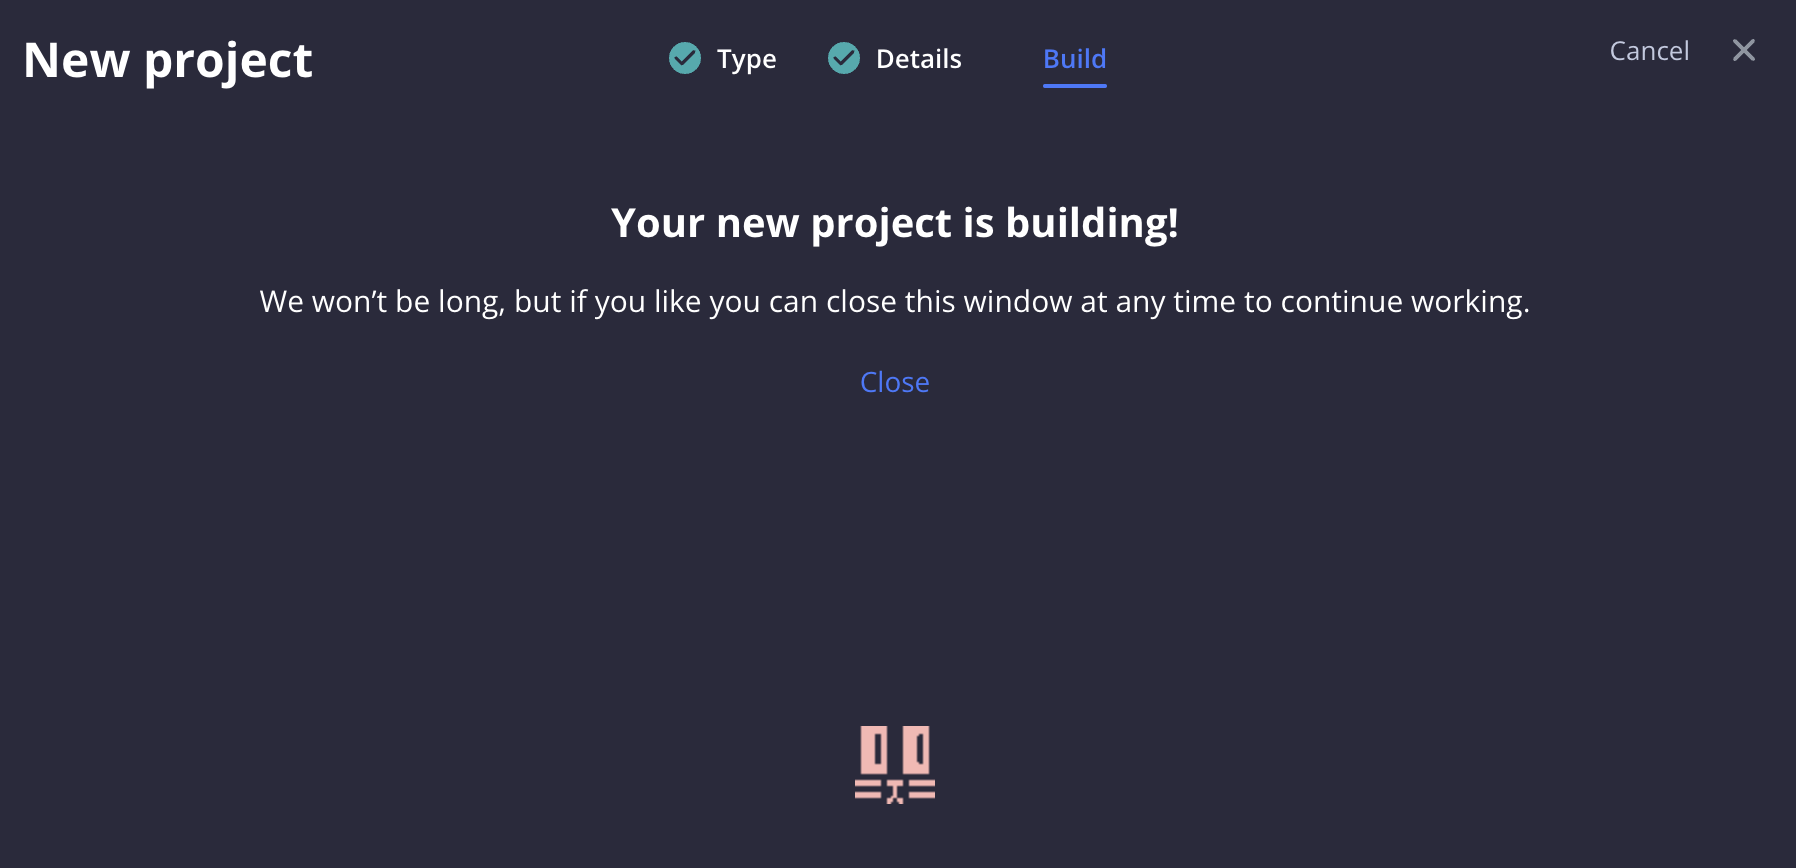 platform.sh: New project building screen